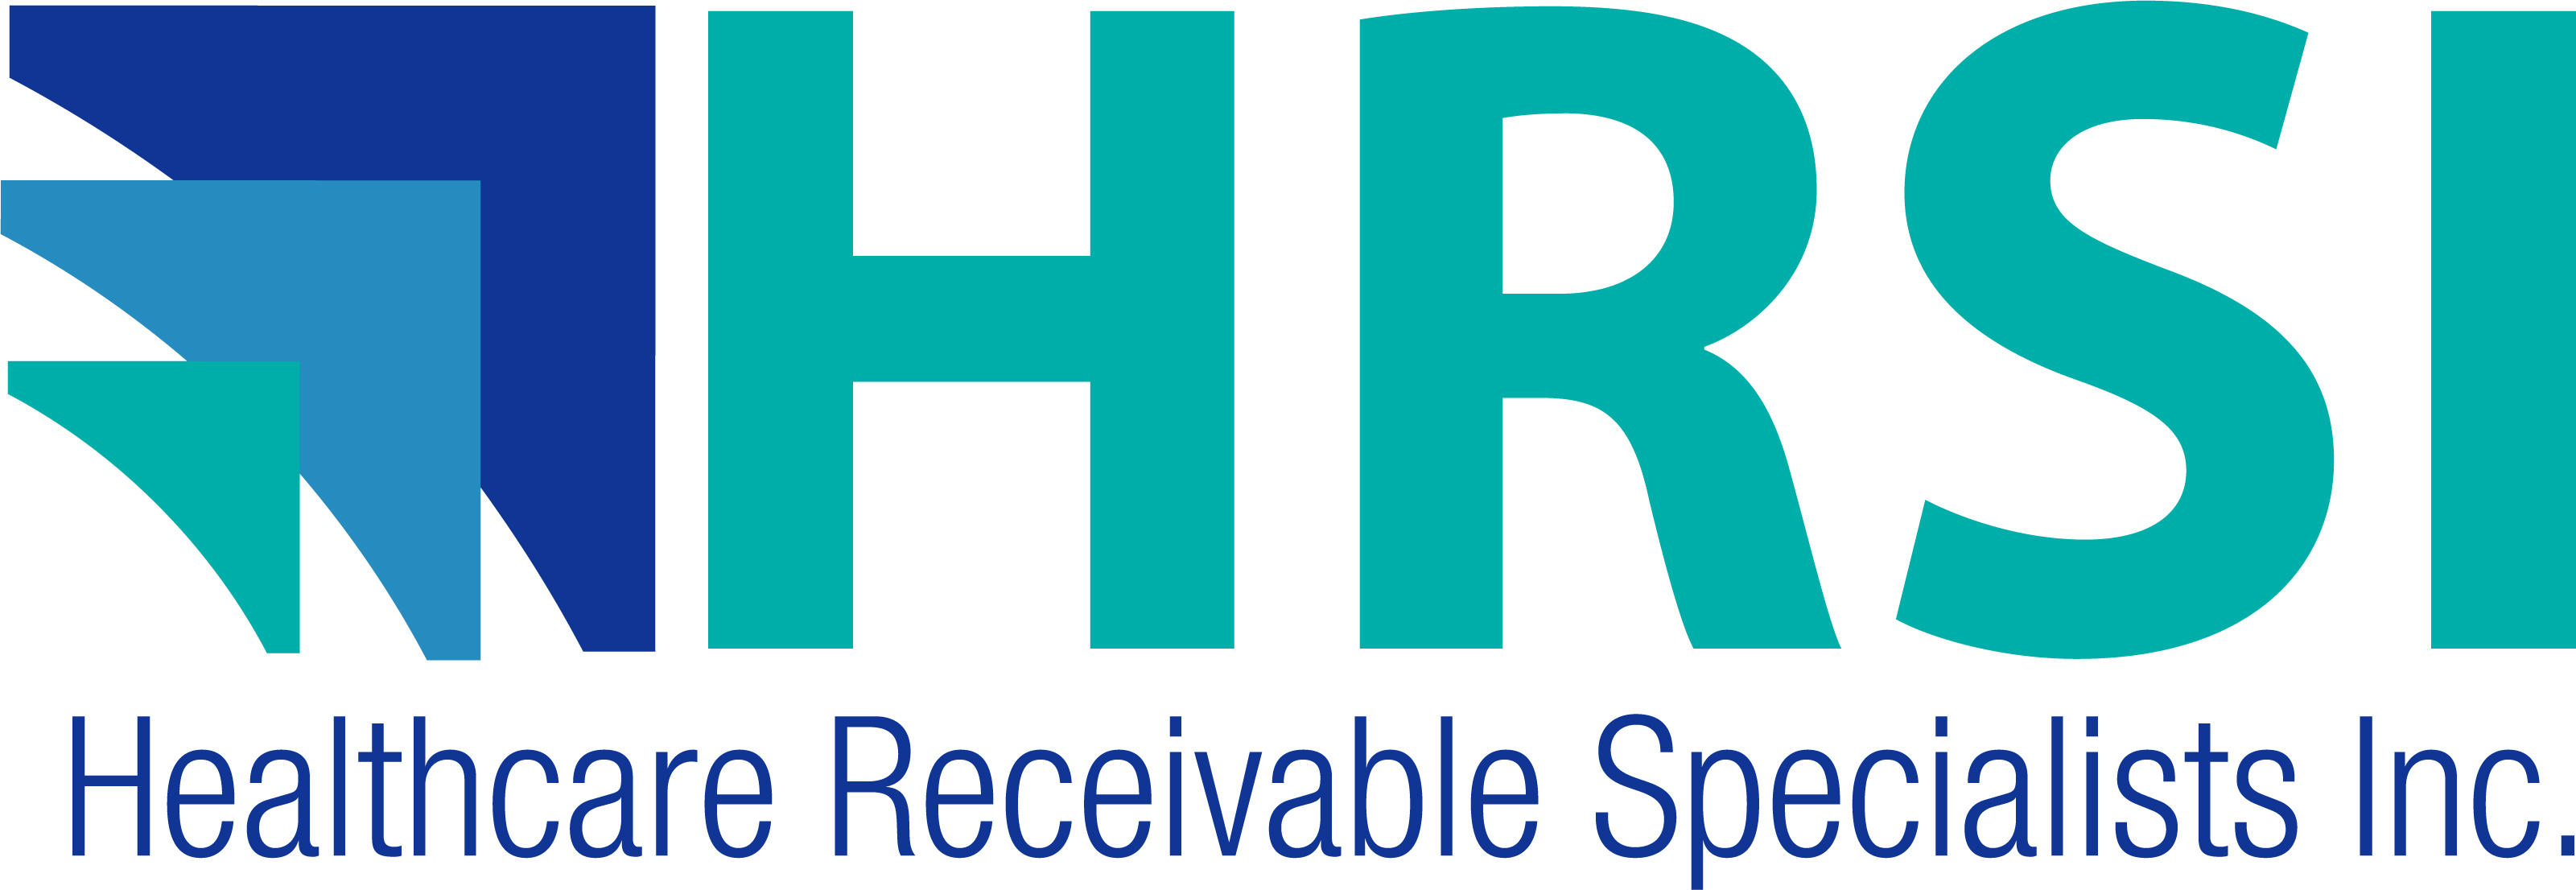 Healthcare Receivable Specialist Inc. logo